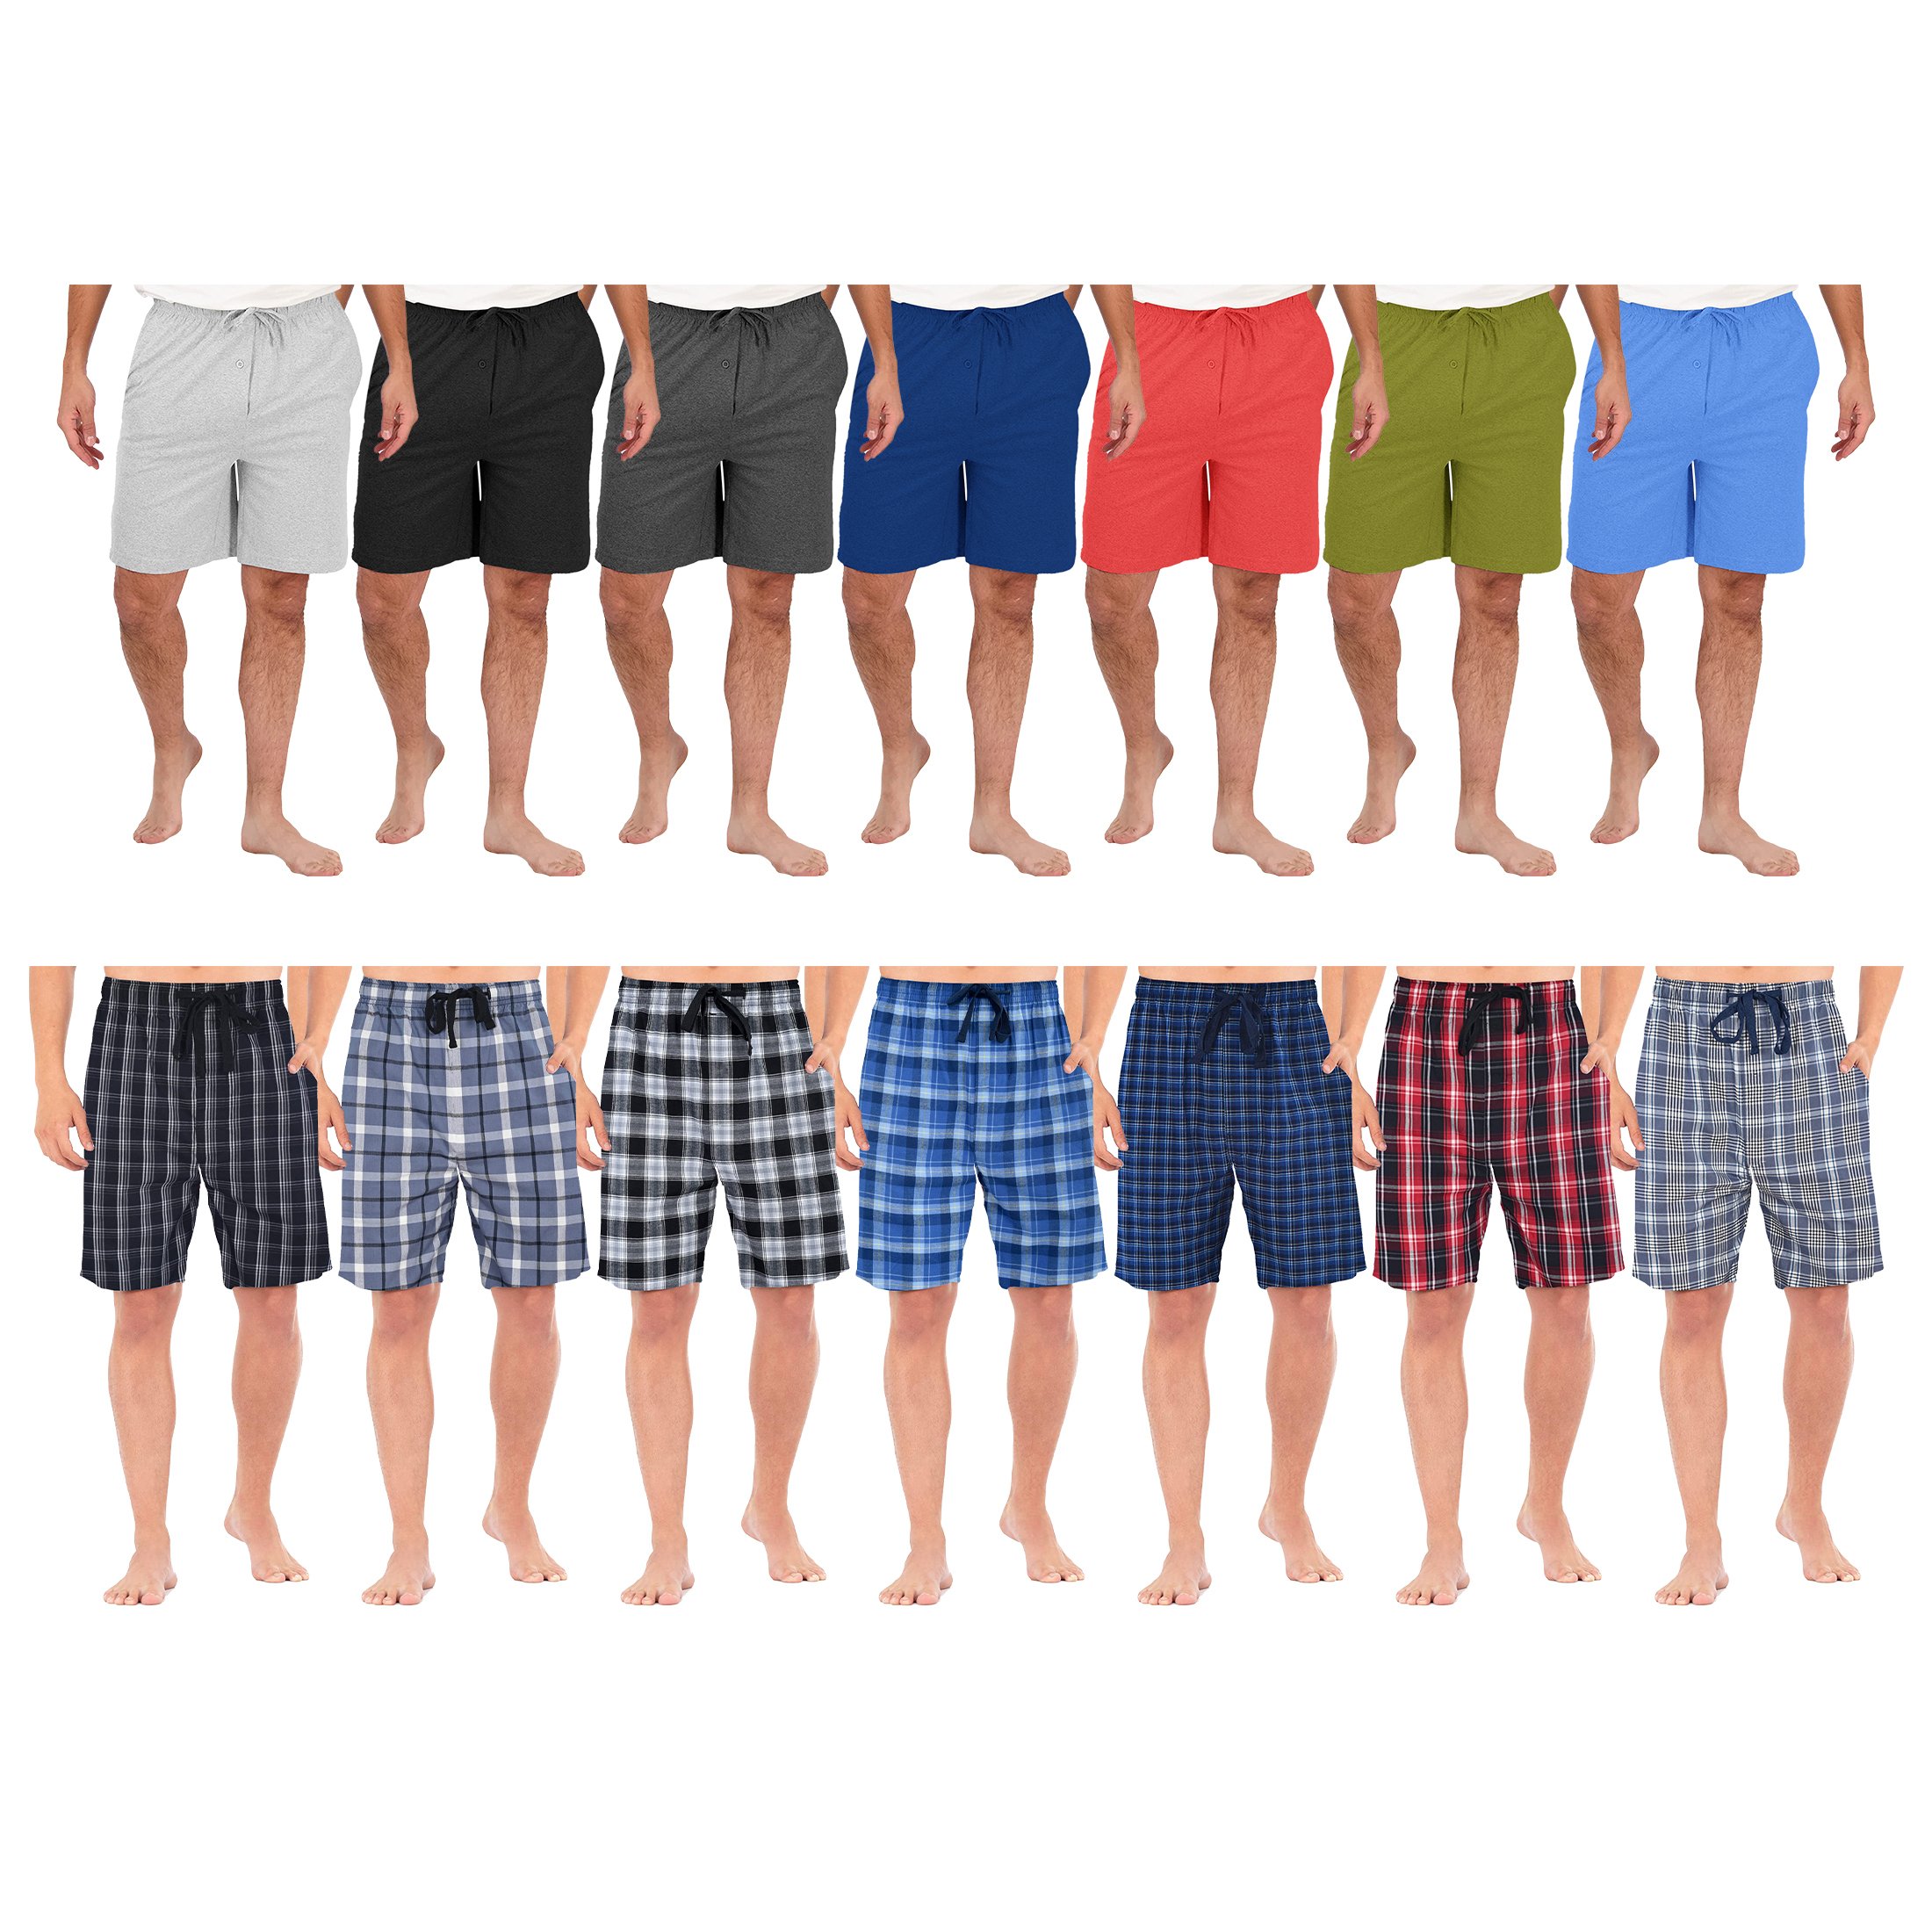 Multi-Pack: Men's Ultra-Soft Jersey Knit Sleep Lounge Pajama Shorts For Sleepwear - Plaid, 1 Pack, Medium